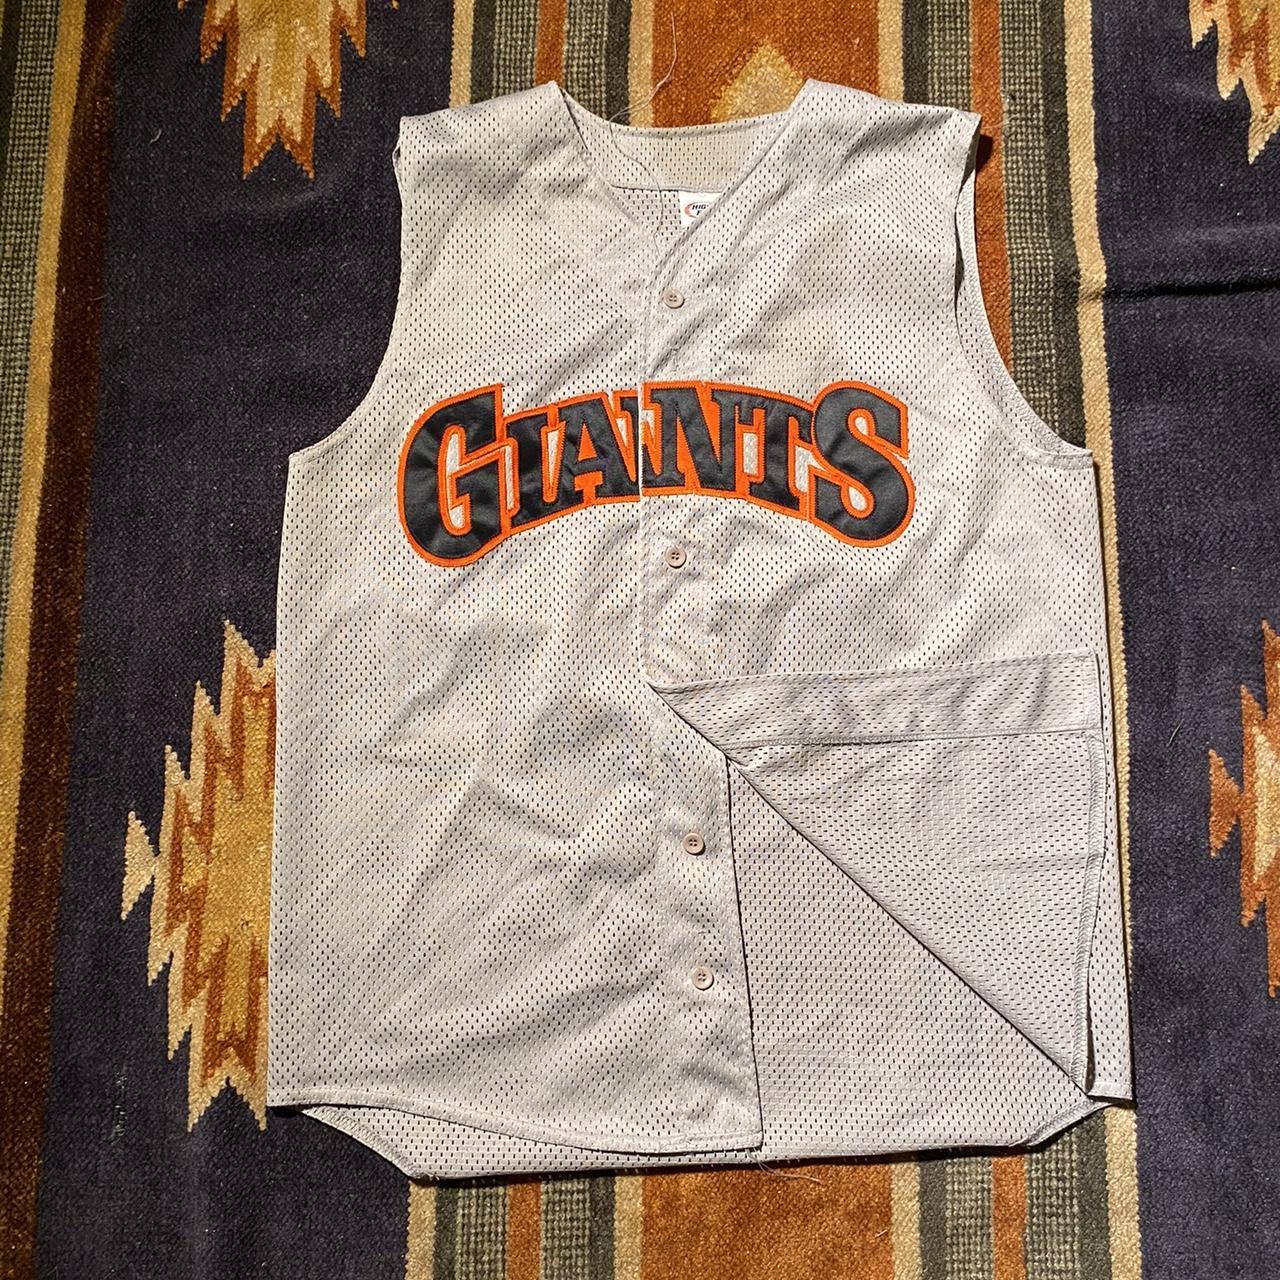 Vintage San Francisco Giants MLB Baseball Jersey - Depop